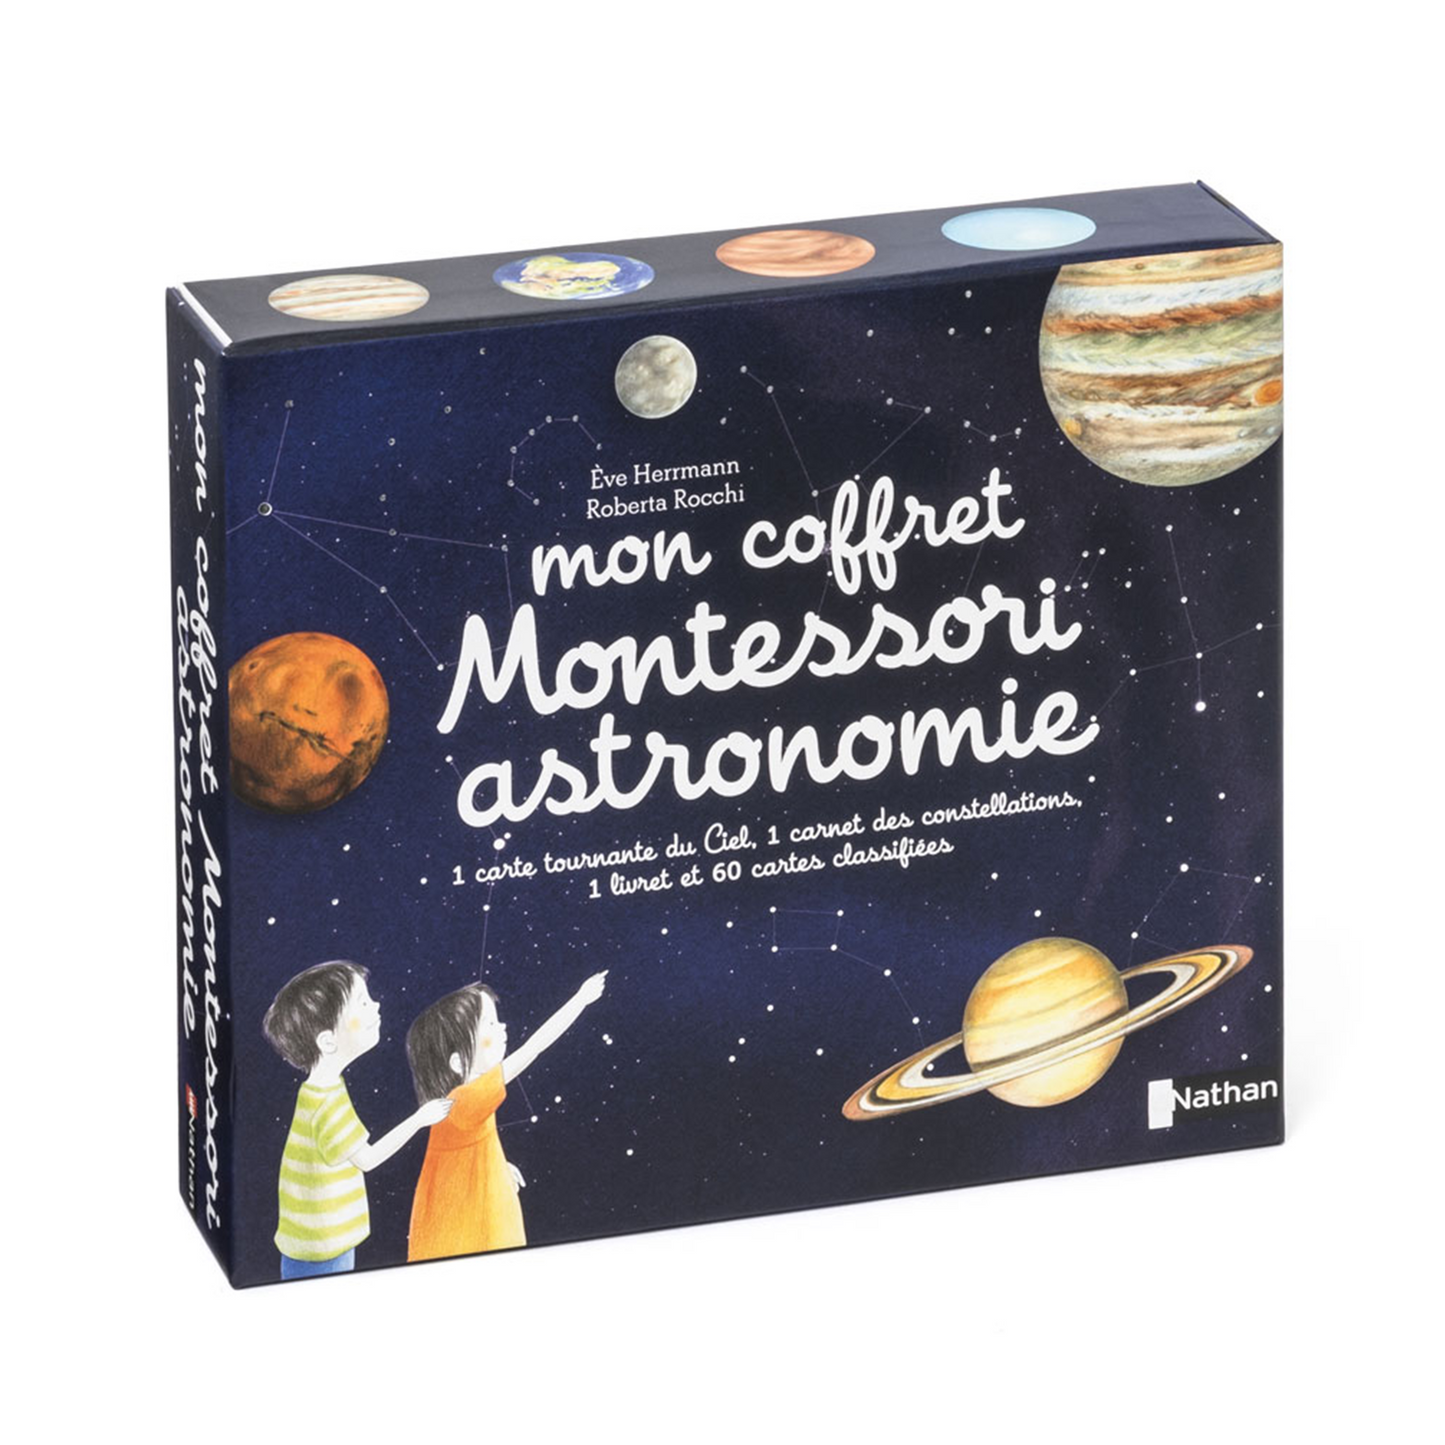 My Montessori astronomy box -Nathan